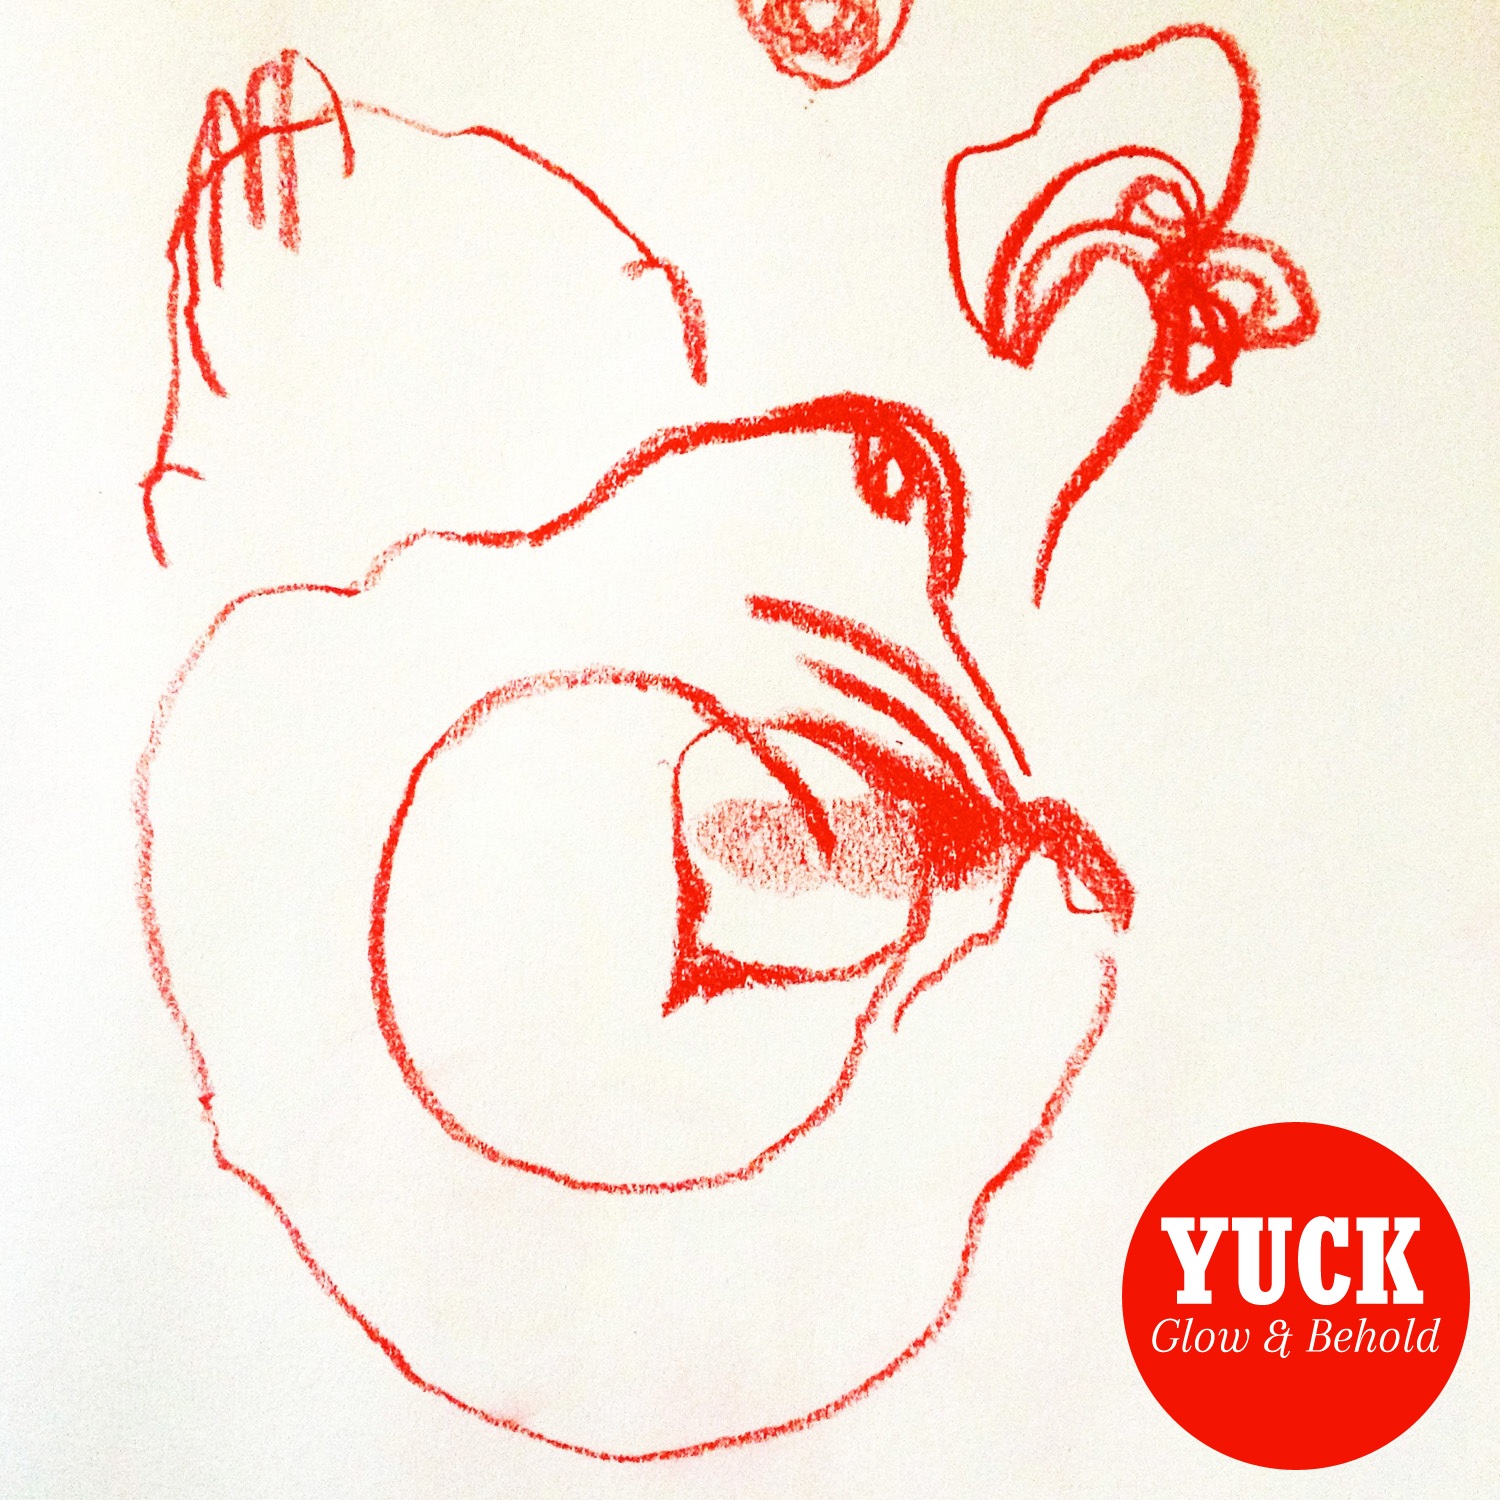 Stream the new Yuck album, Glow & Behold via NY Times